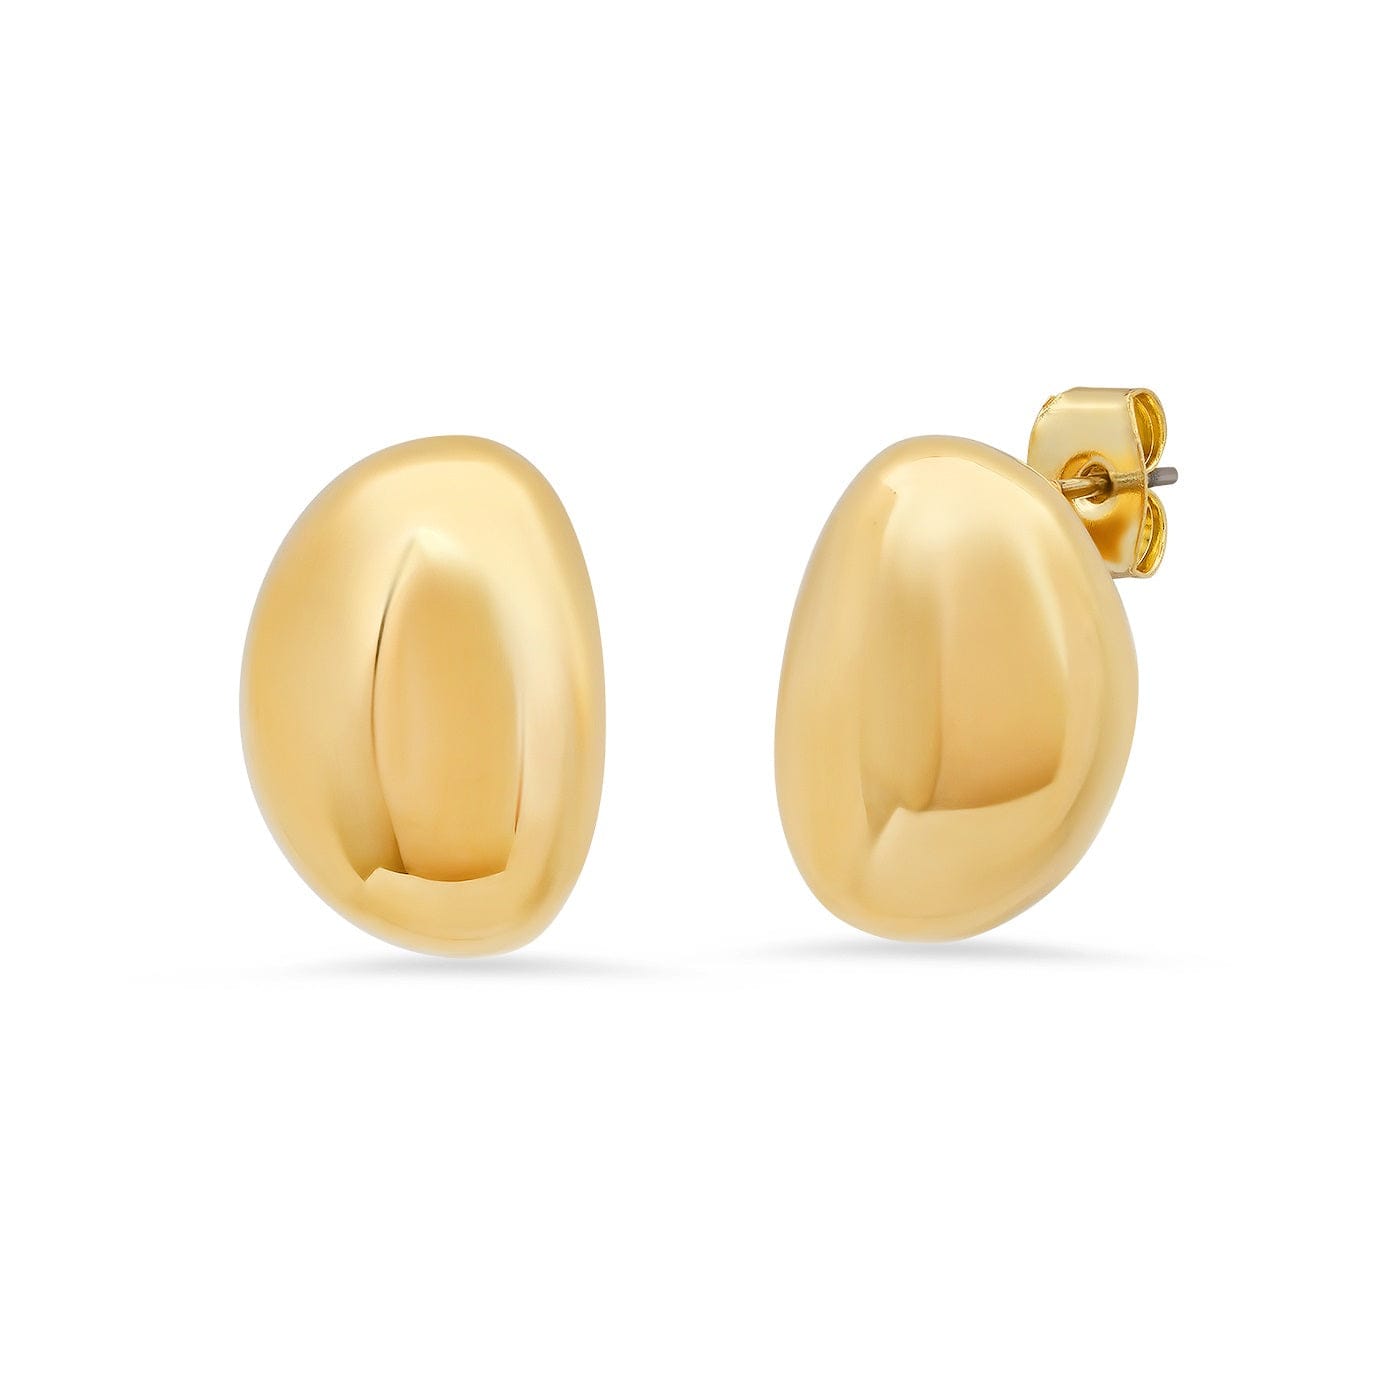 TAI JEWELRY Earrings Hammered Gold Bean Earrings